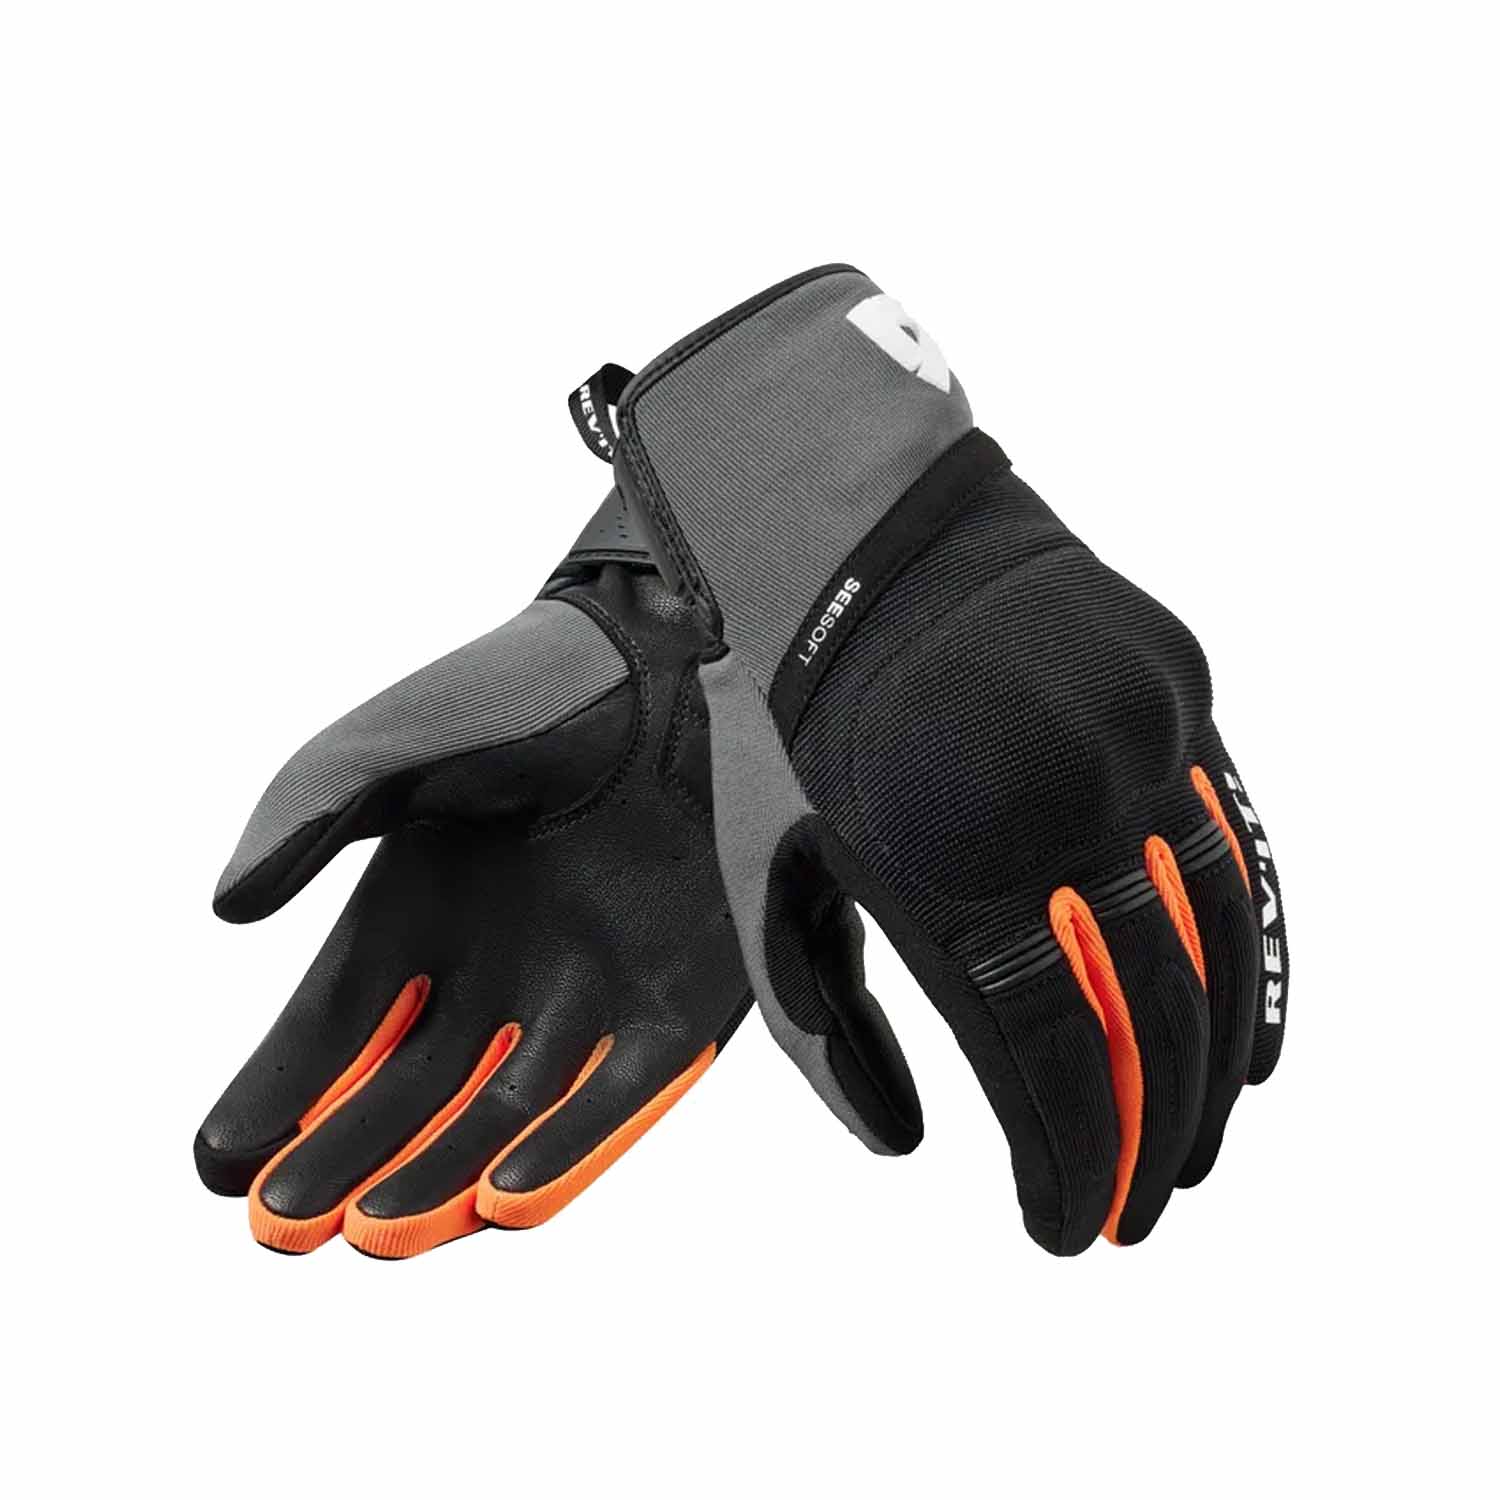 REV'IT! Mosca 2 Gloves Black Orange Größe